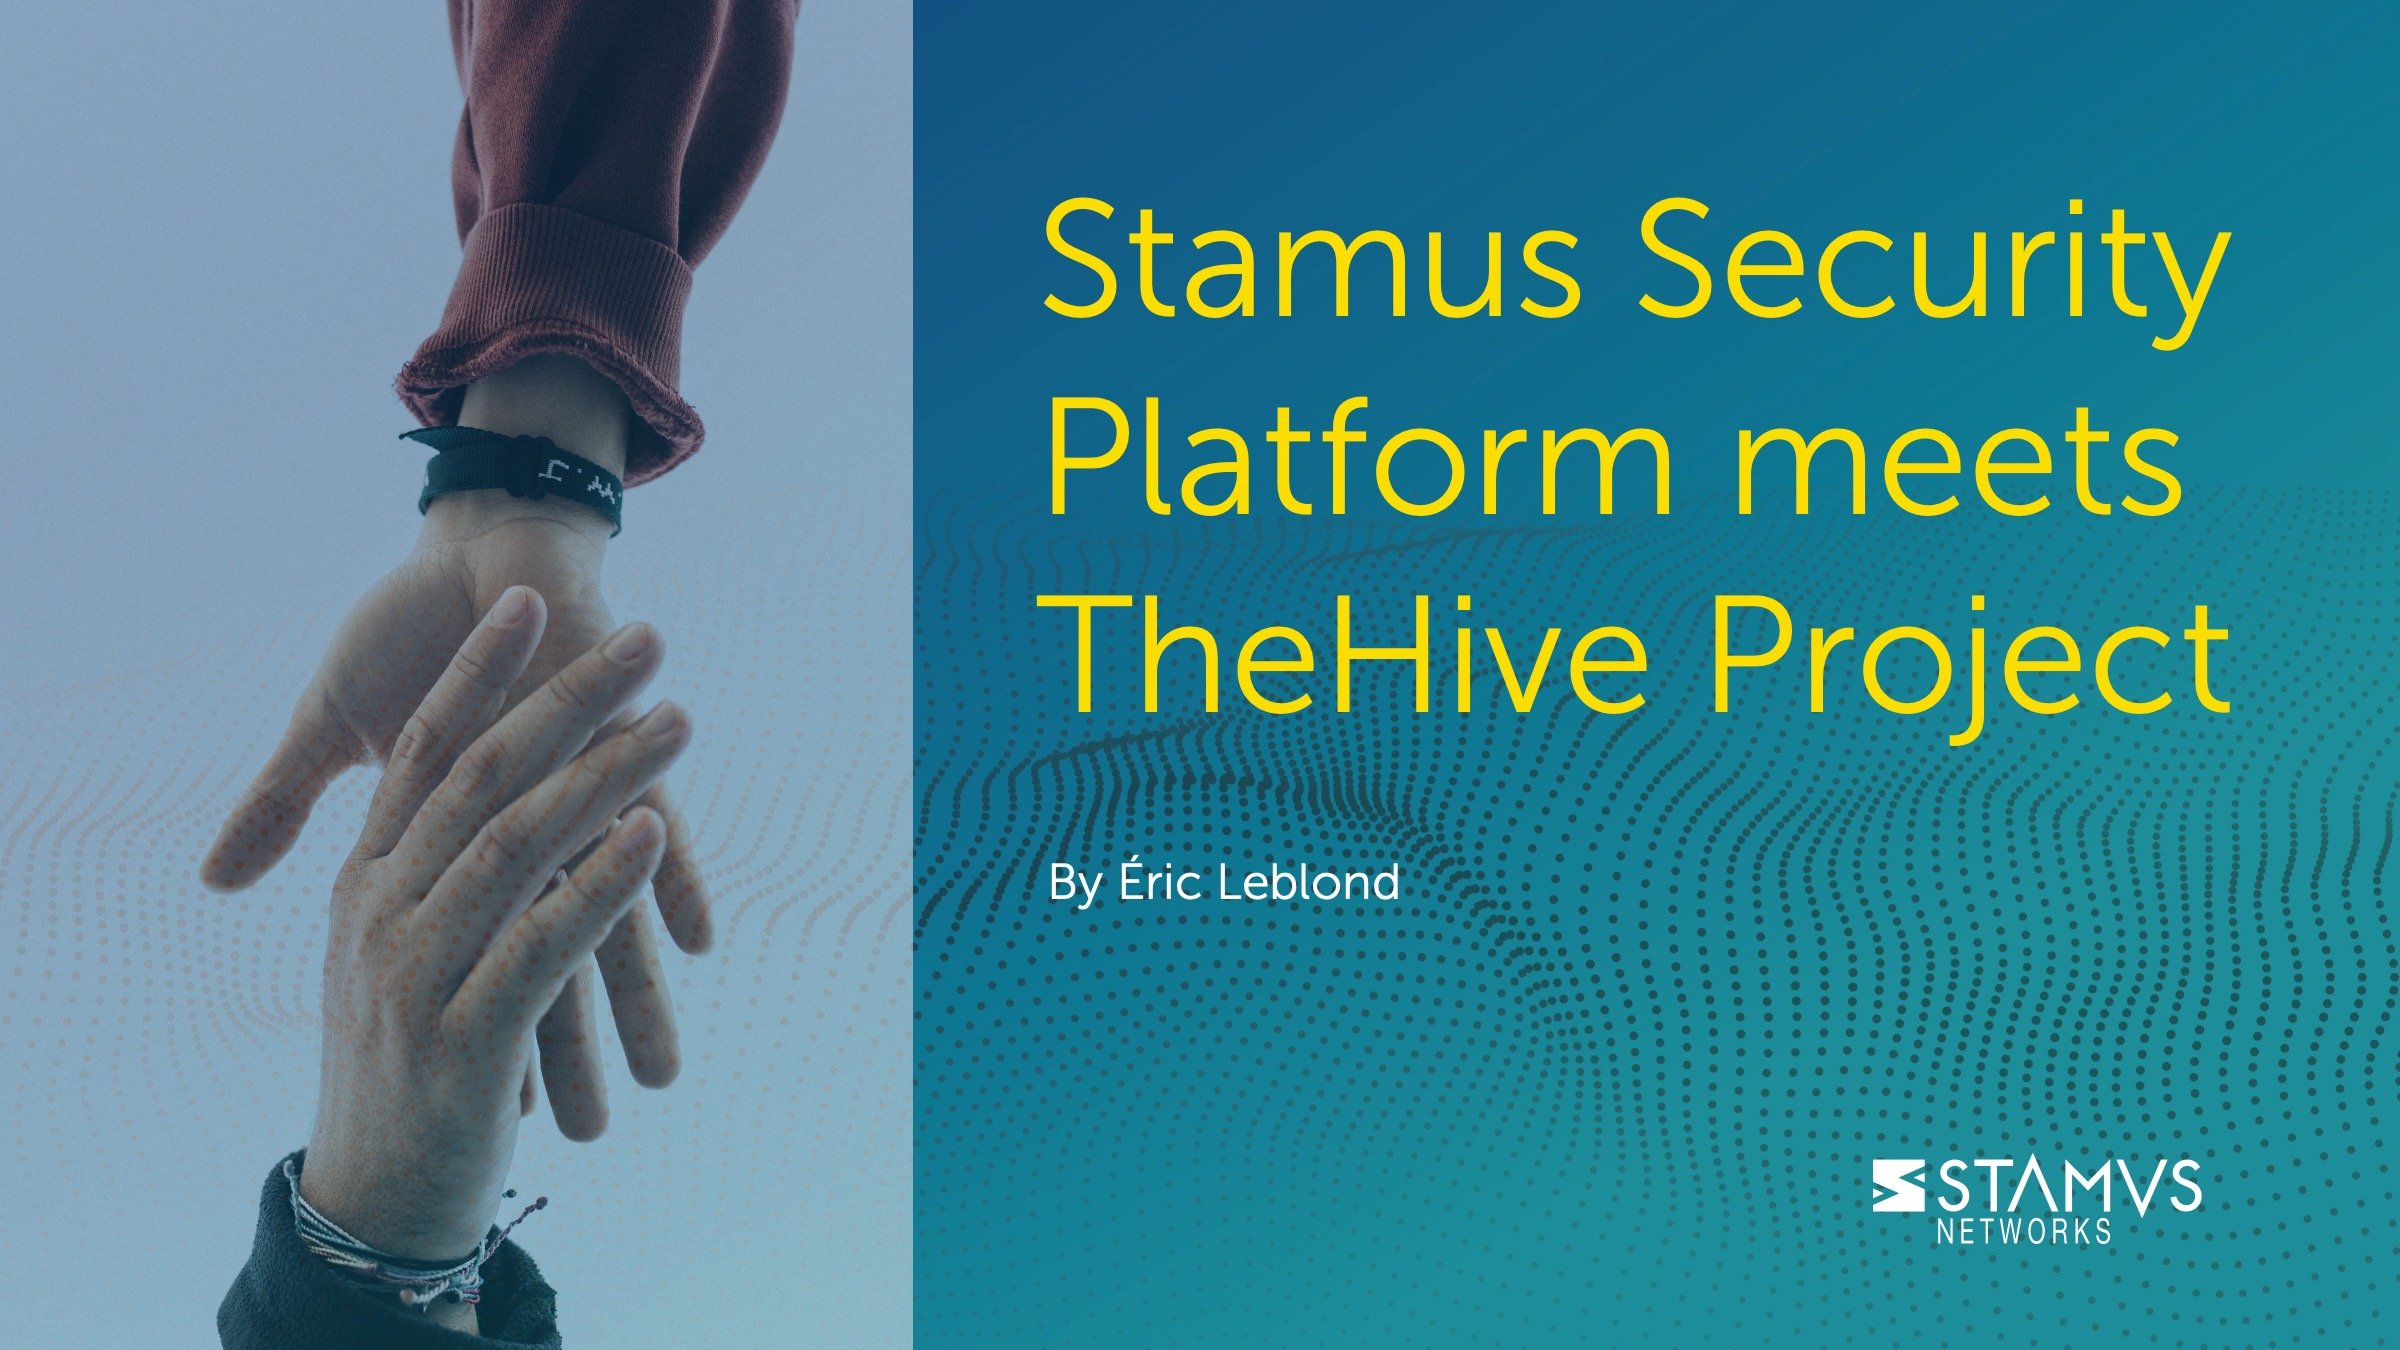 Stamus Security Platform and TheHive